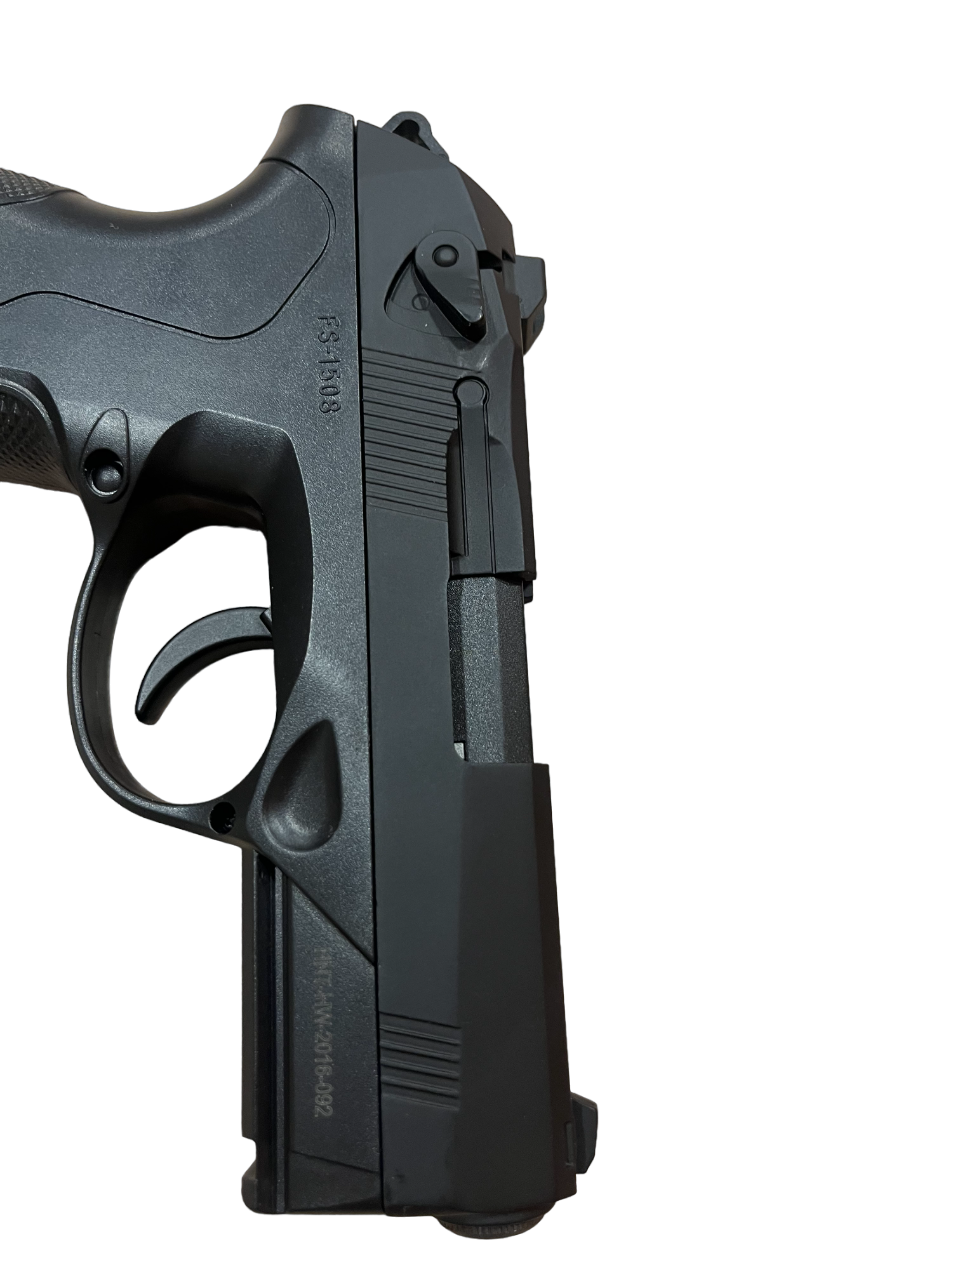 Hwasan Small PX4 Co2 Pistol (4.5mm-BK)